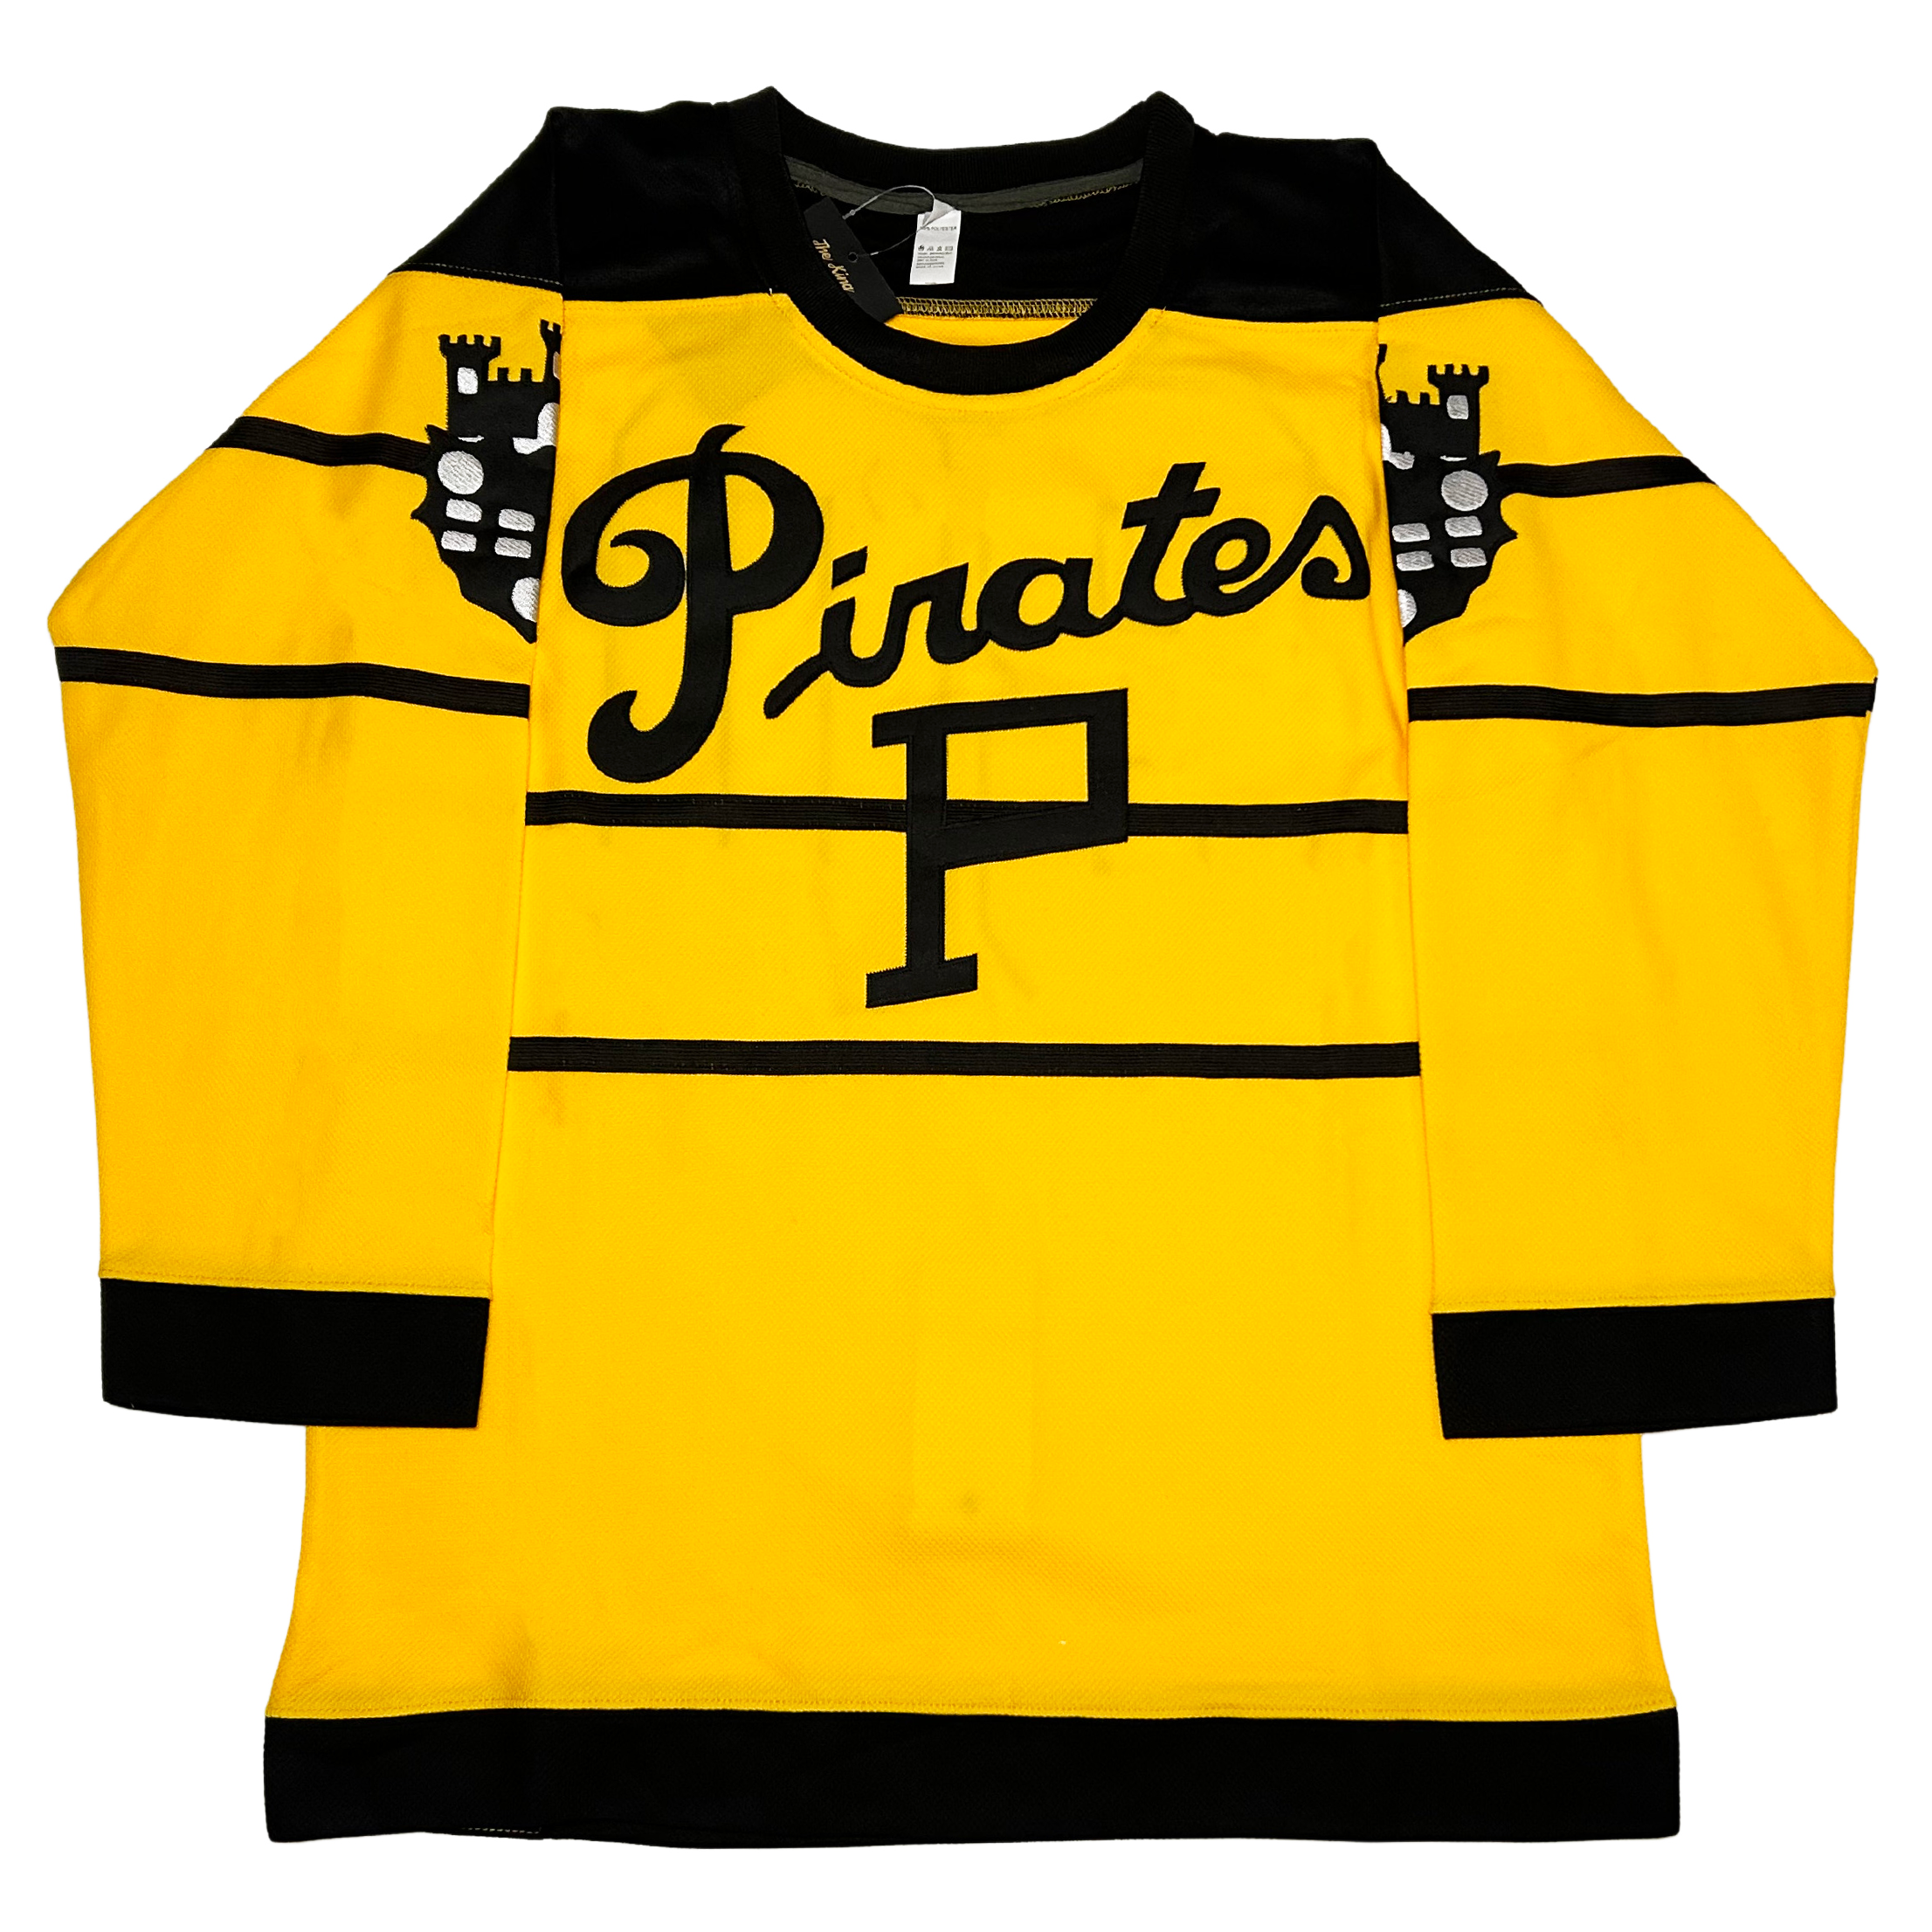 NHL, Shirts, Nwt Mens Size Large Nhl Pittsburgh Pirates Hockey Jersey